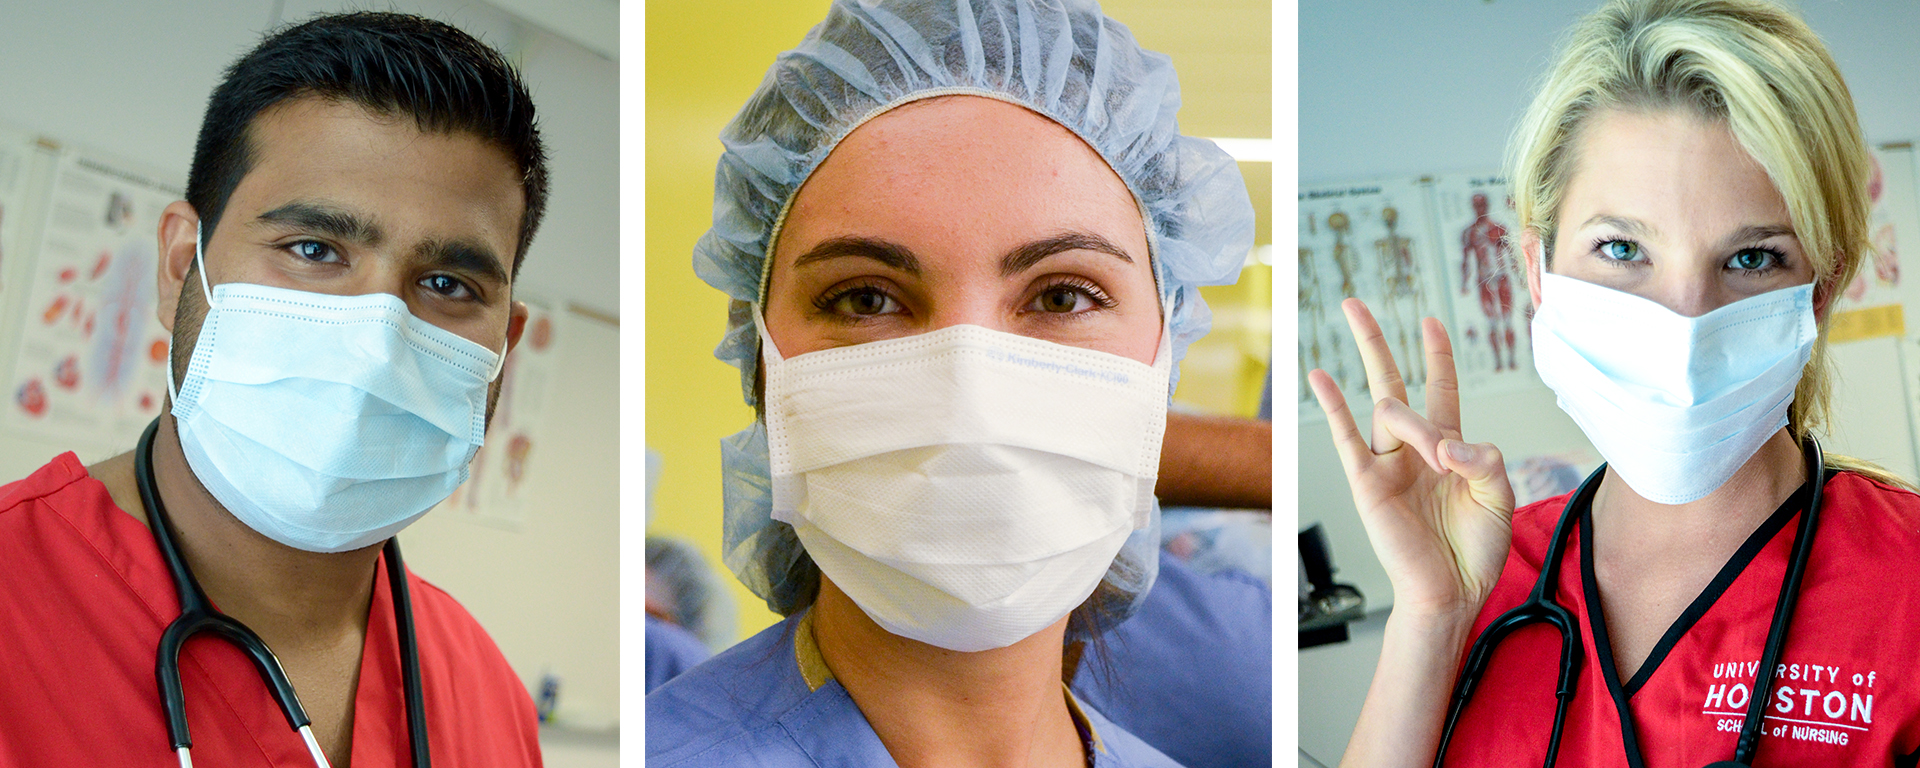 Three portraits of nurses wearing face masks